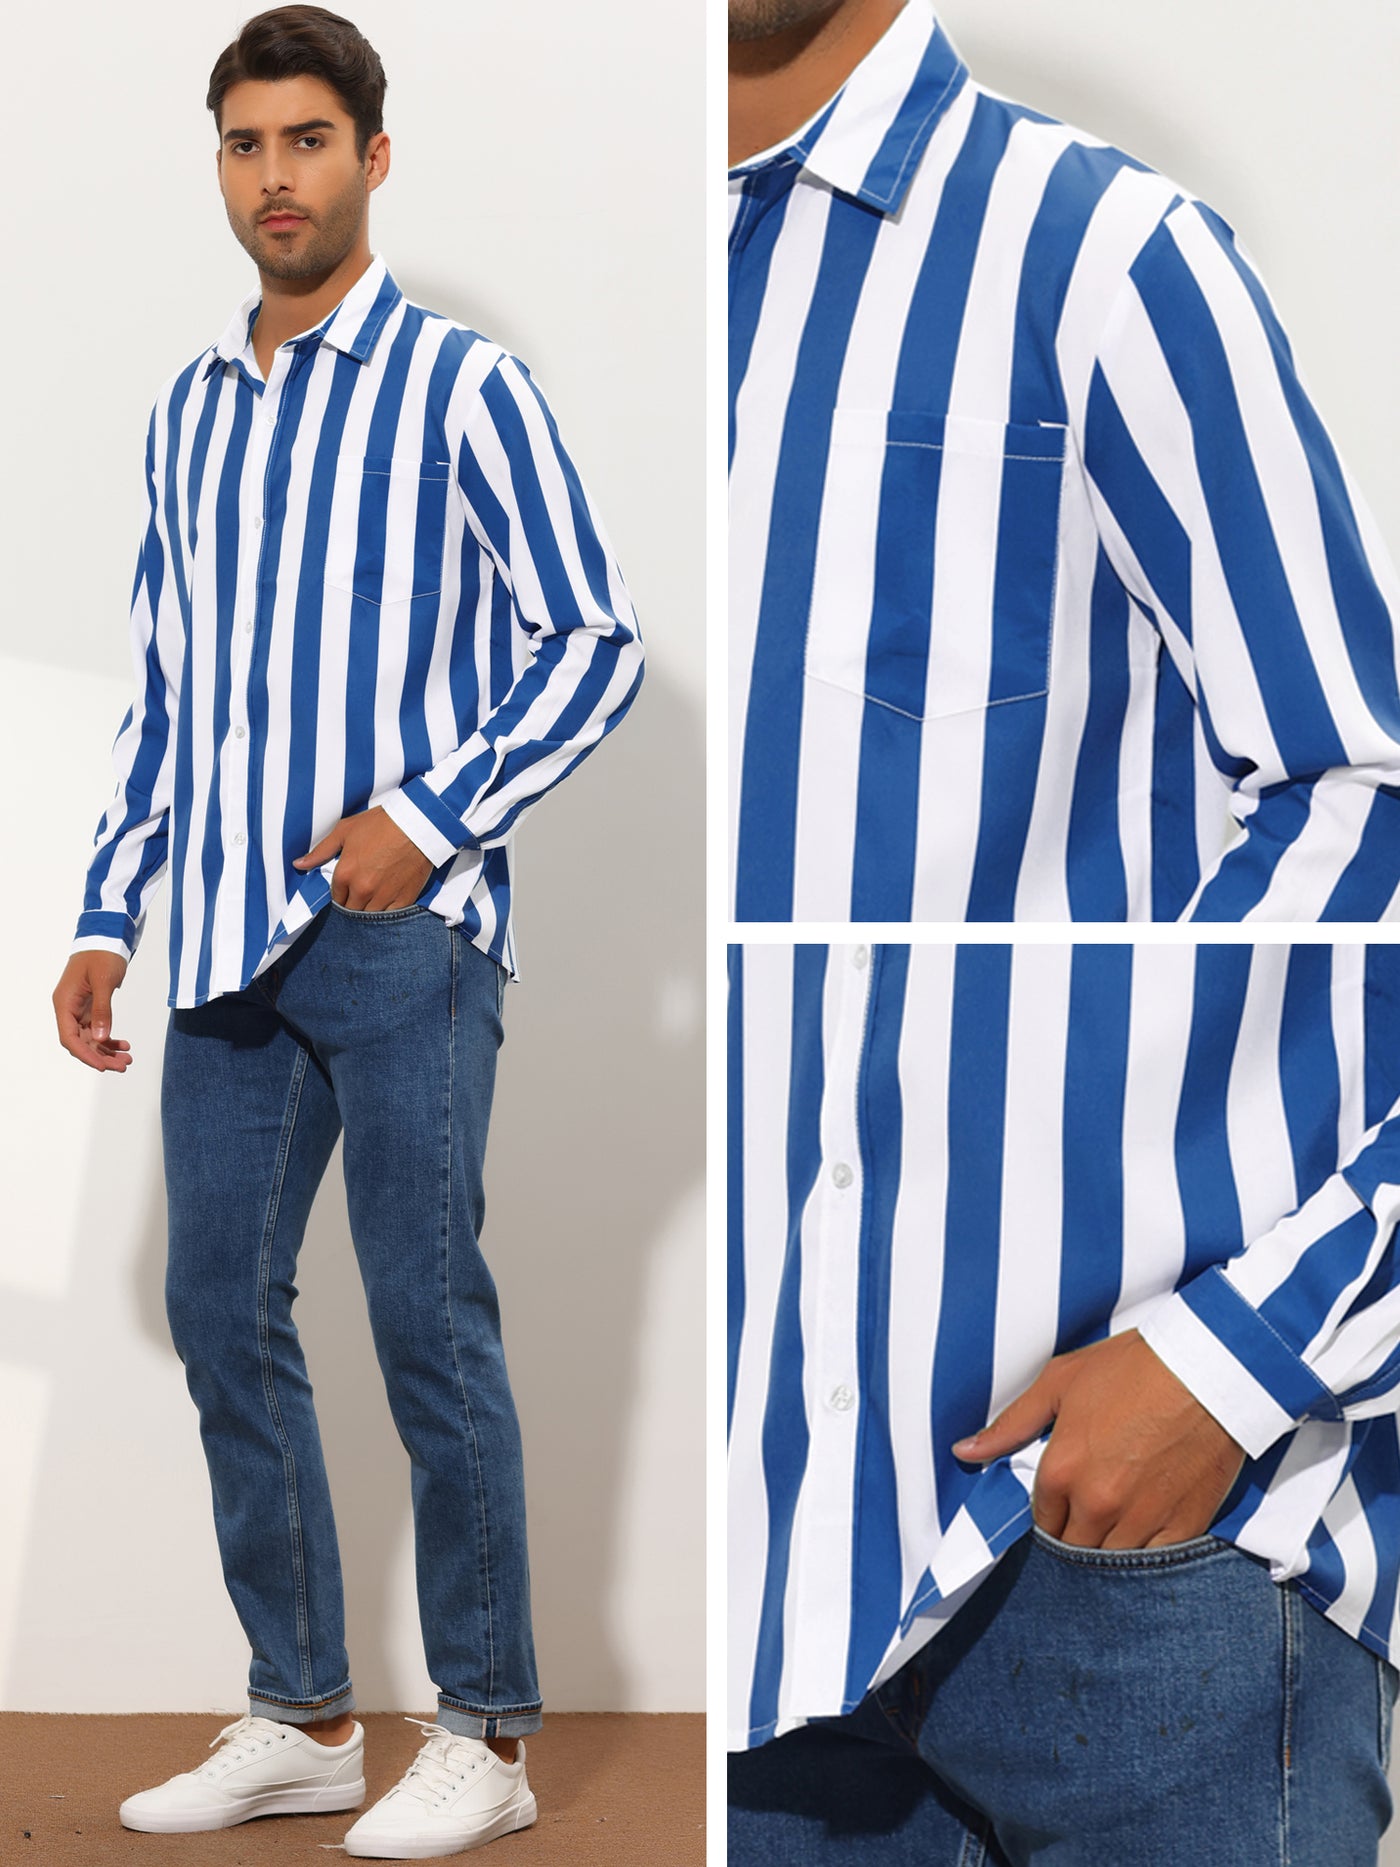 Bublédon Men's Striped Shirt Long Sleeve Button Down Color Block Shirts